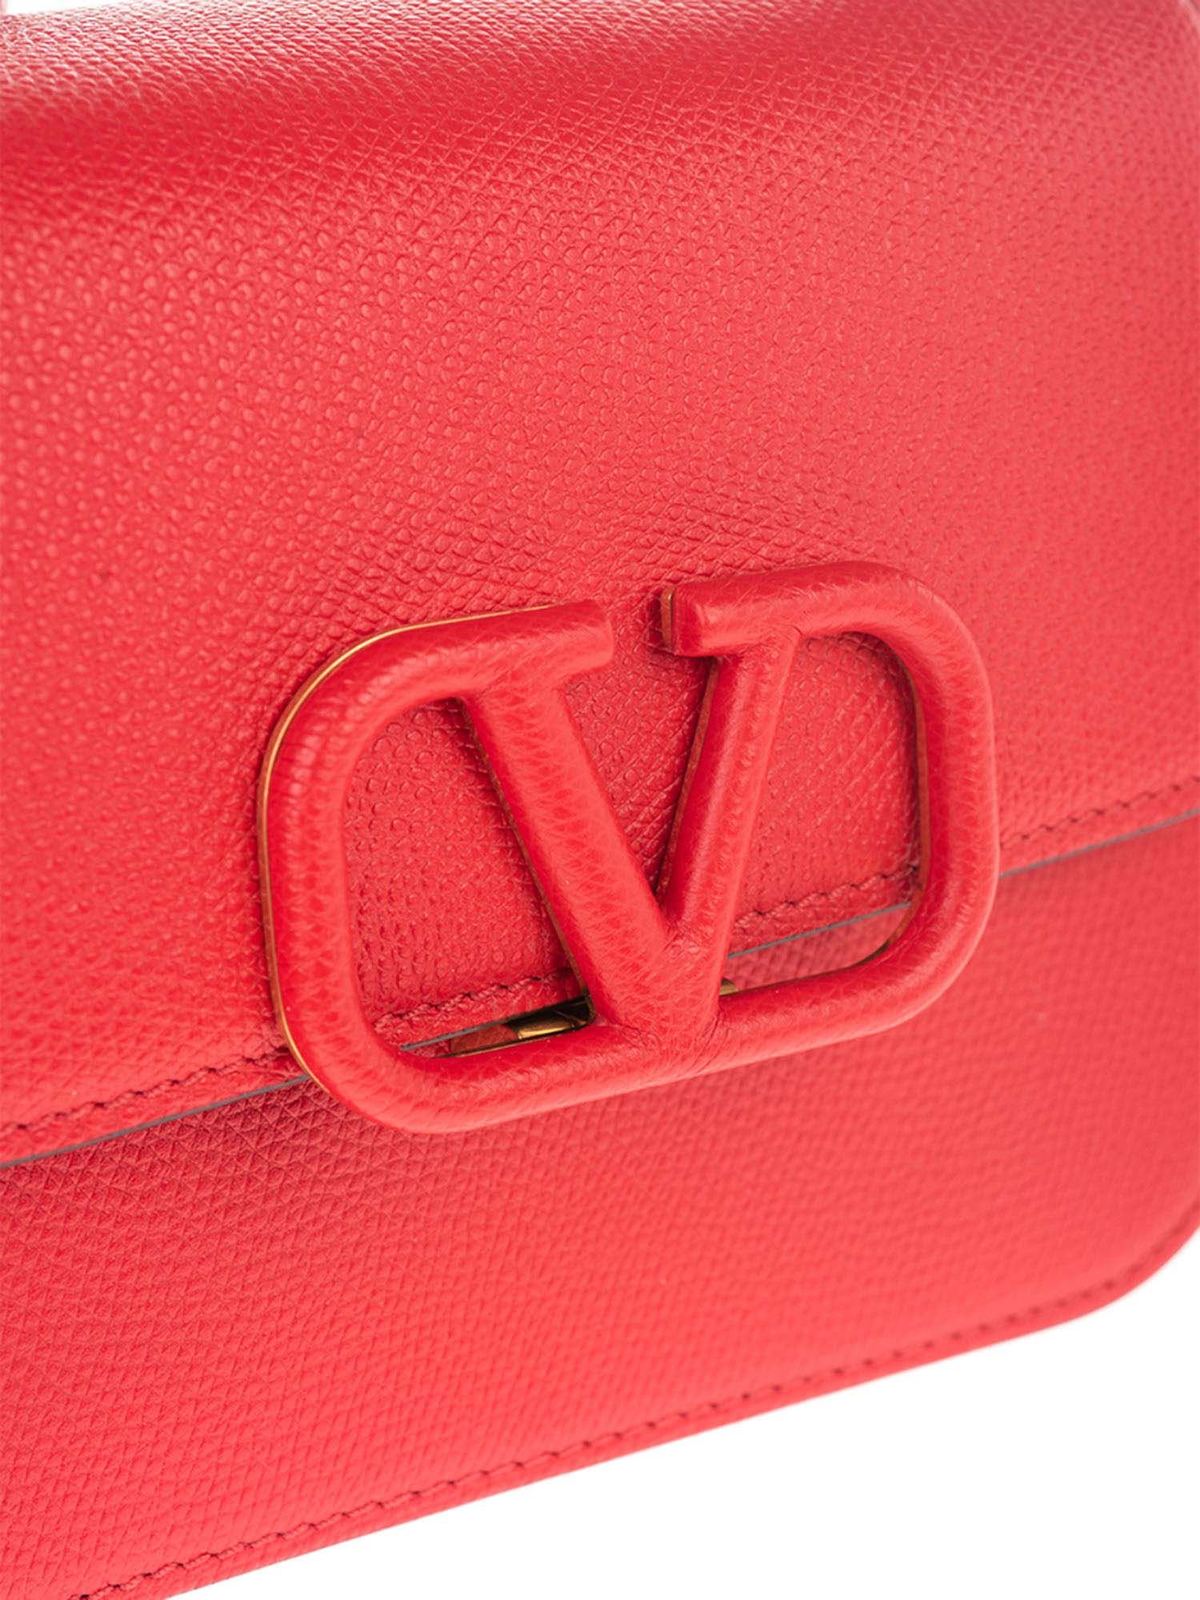 VALENTINO GARAVANI: VSling leather bag - Red